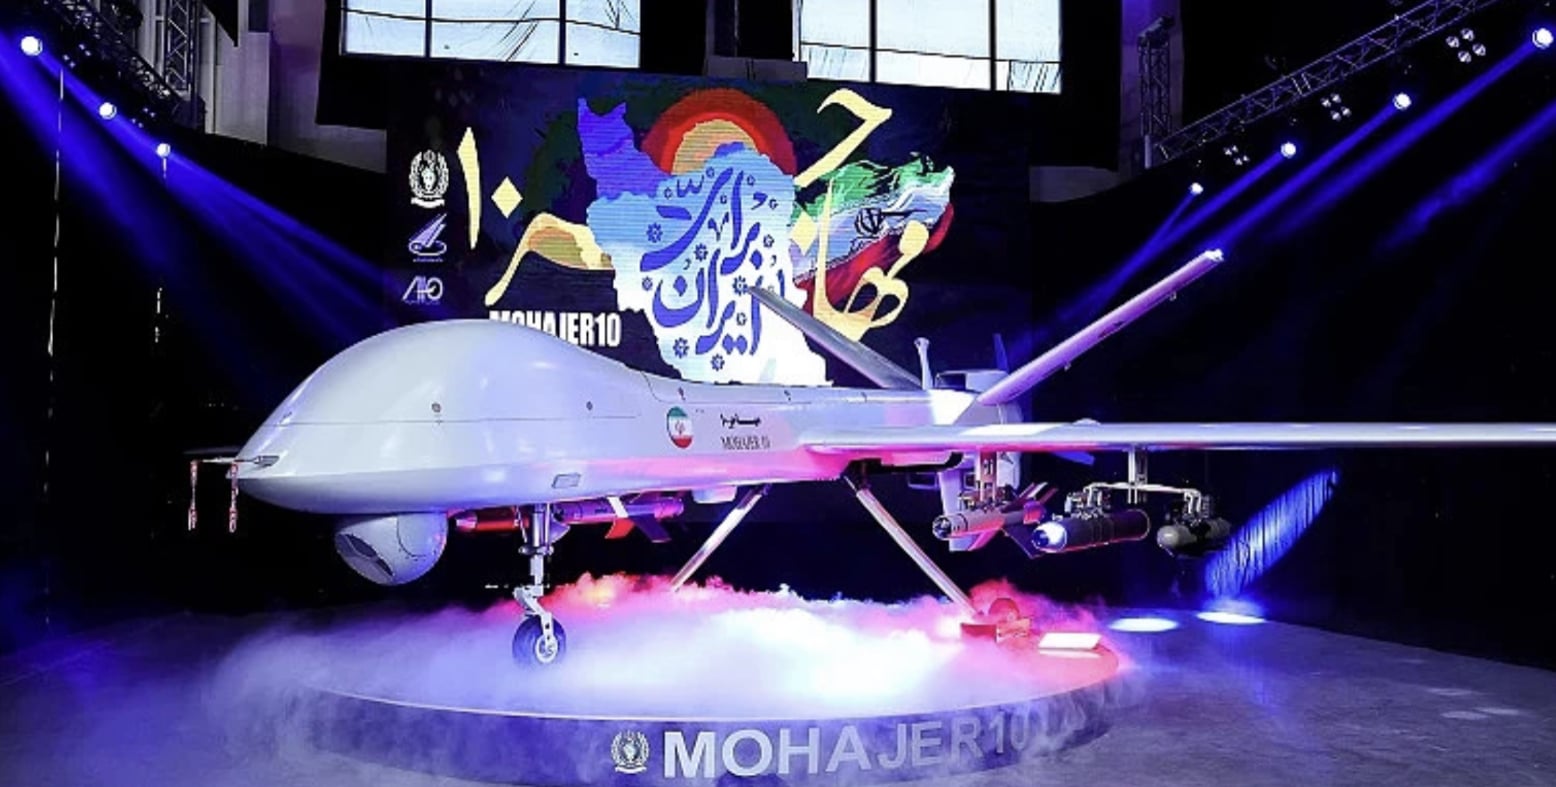 Novo drone iraniano Mohajer-10 tem alcance de 2.000km